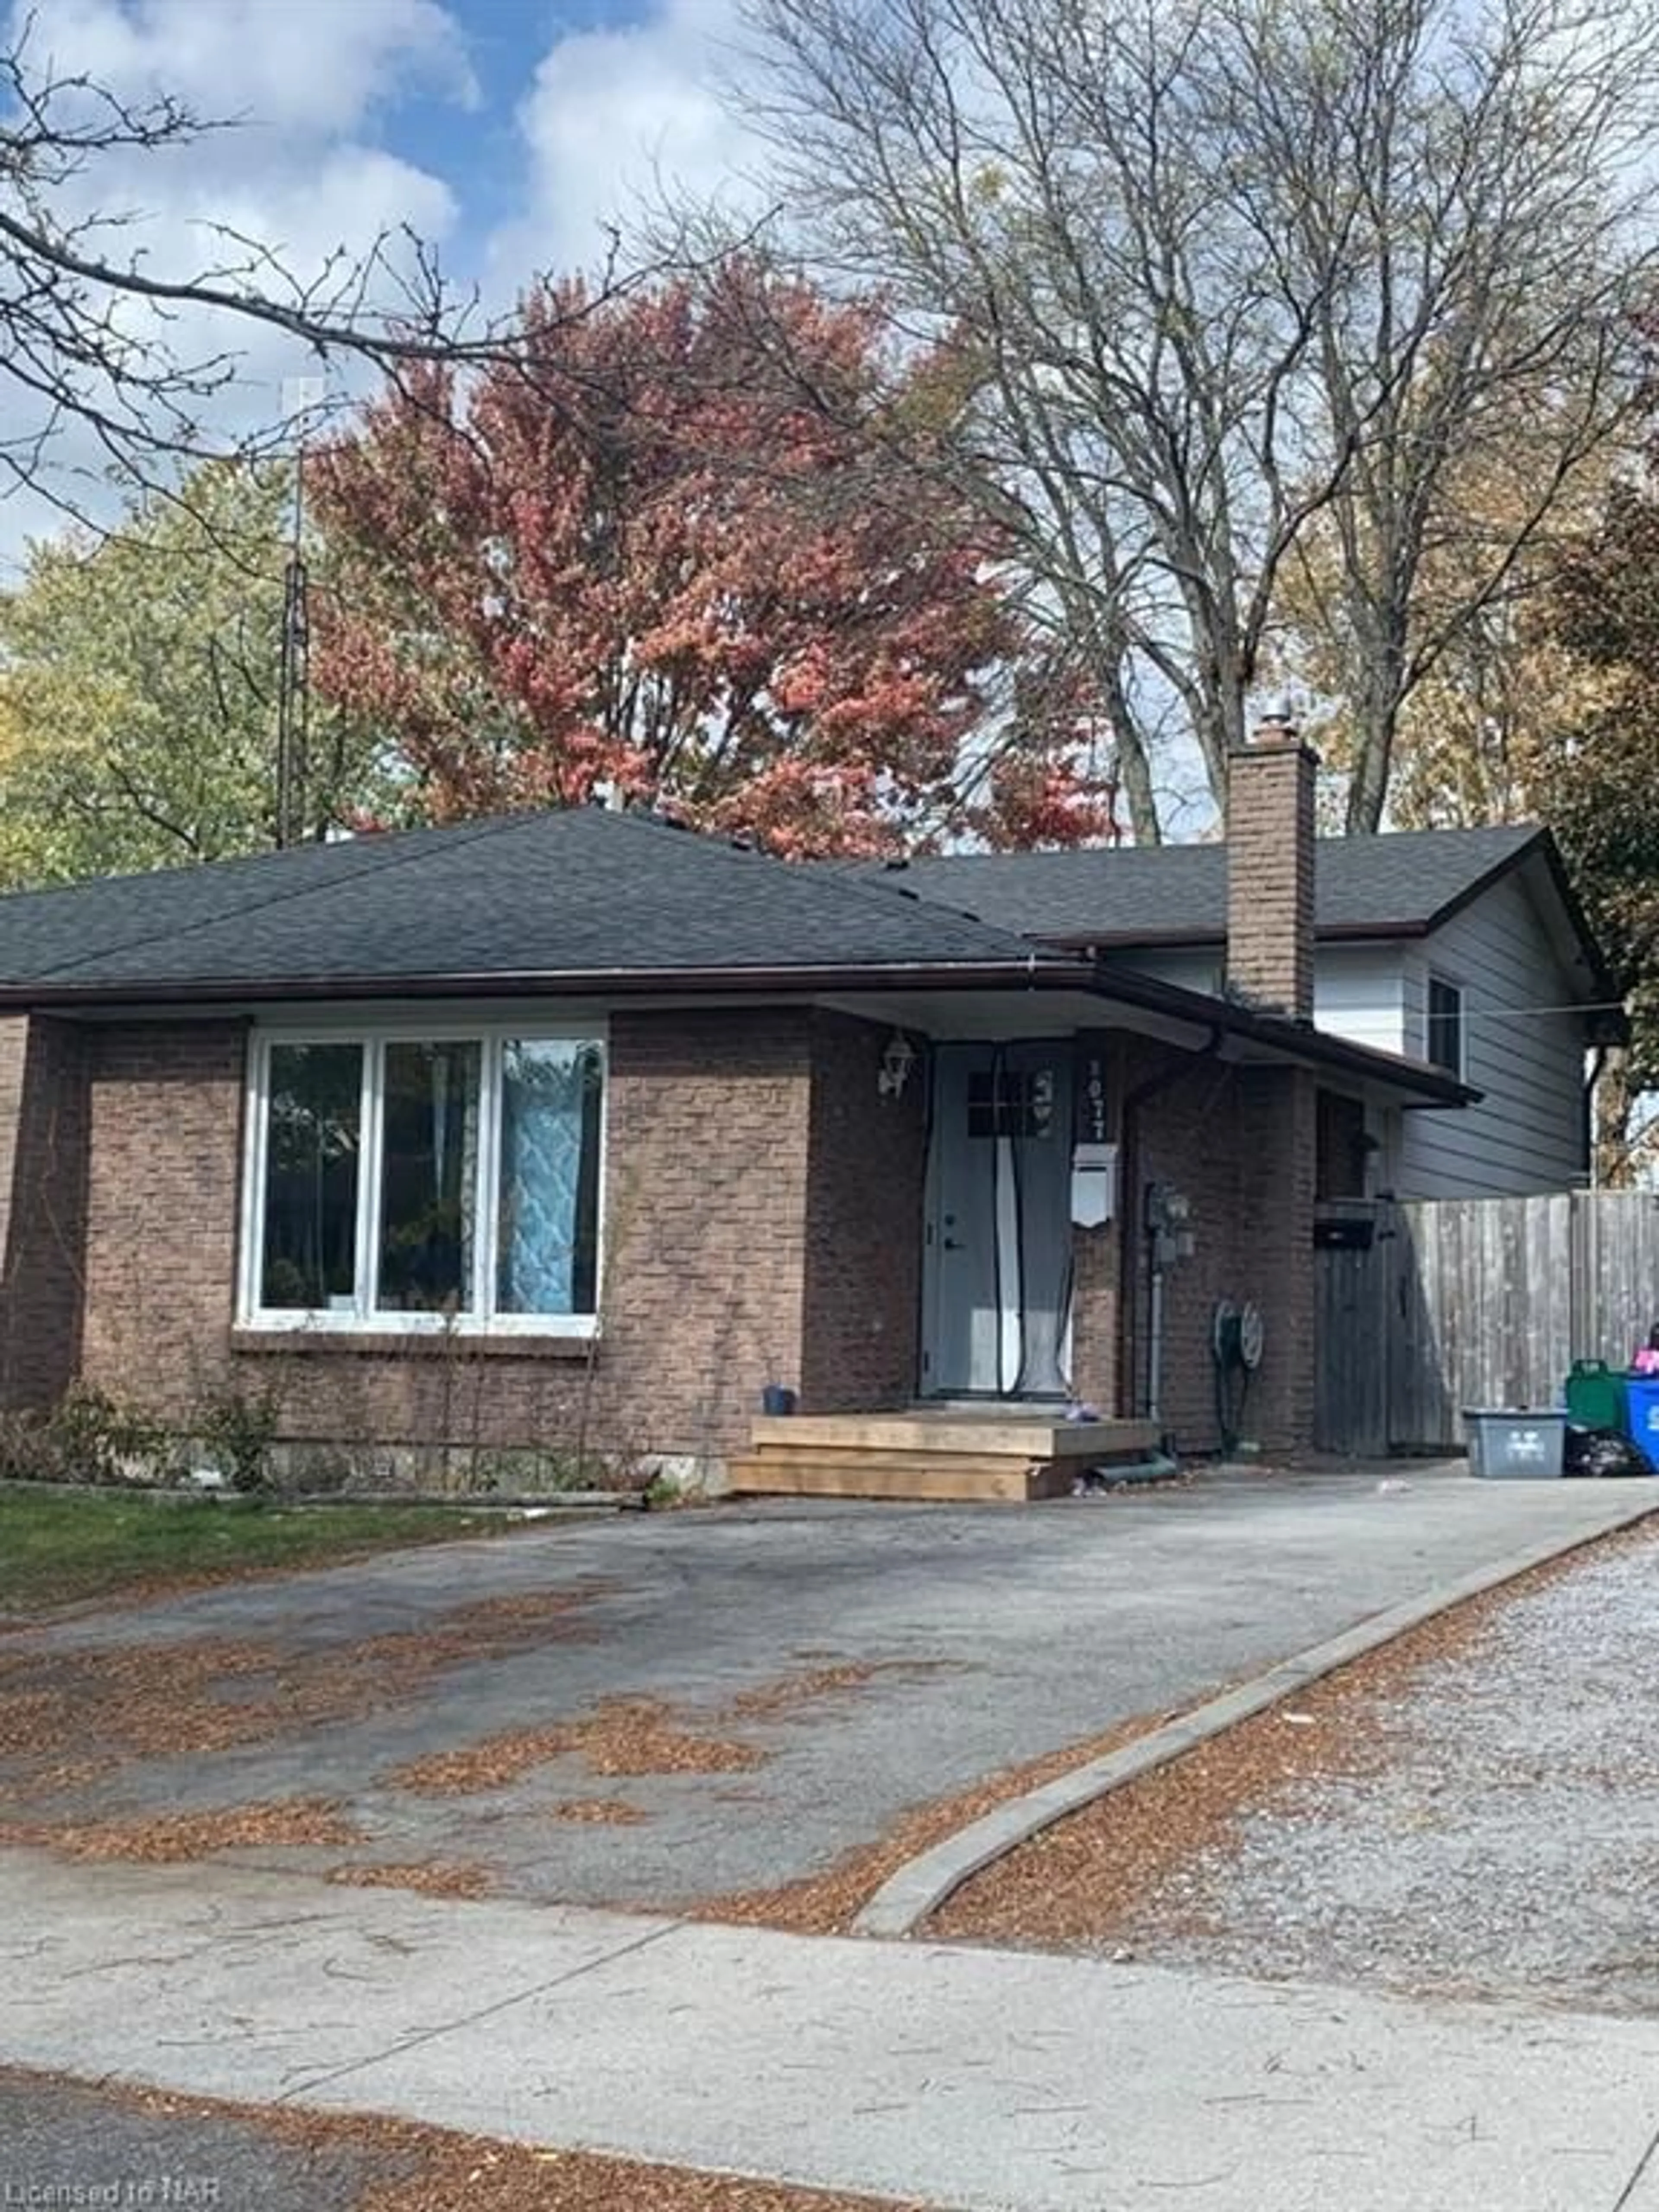 Home with brick exterior material for 8077 Aintree Dr, Niagara Falls Ontario L2V 1H3